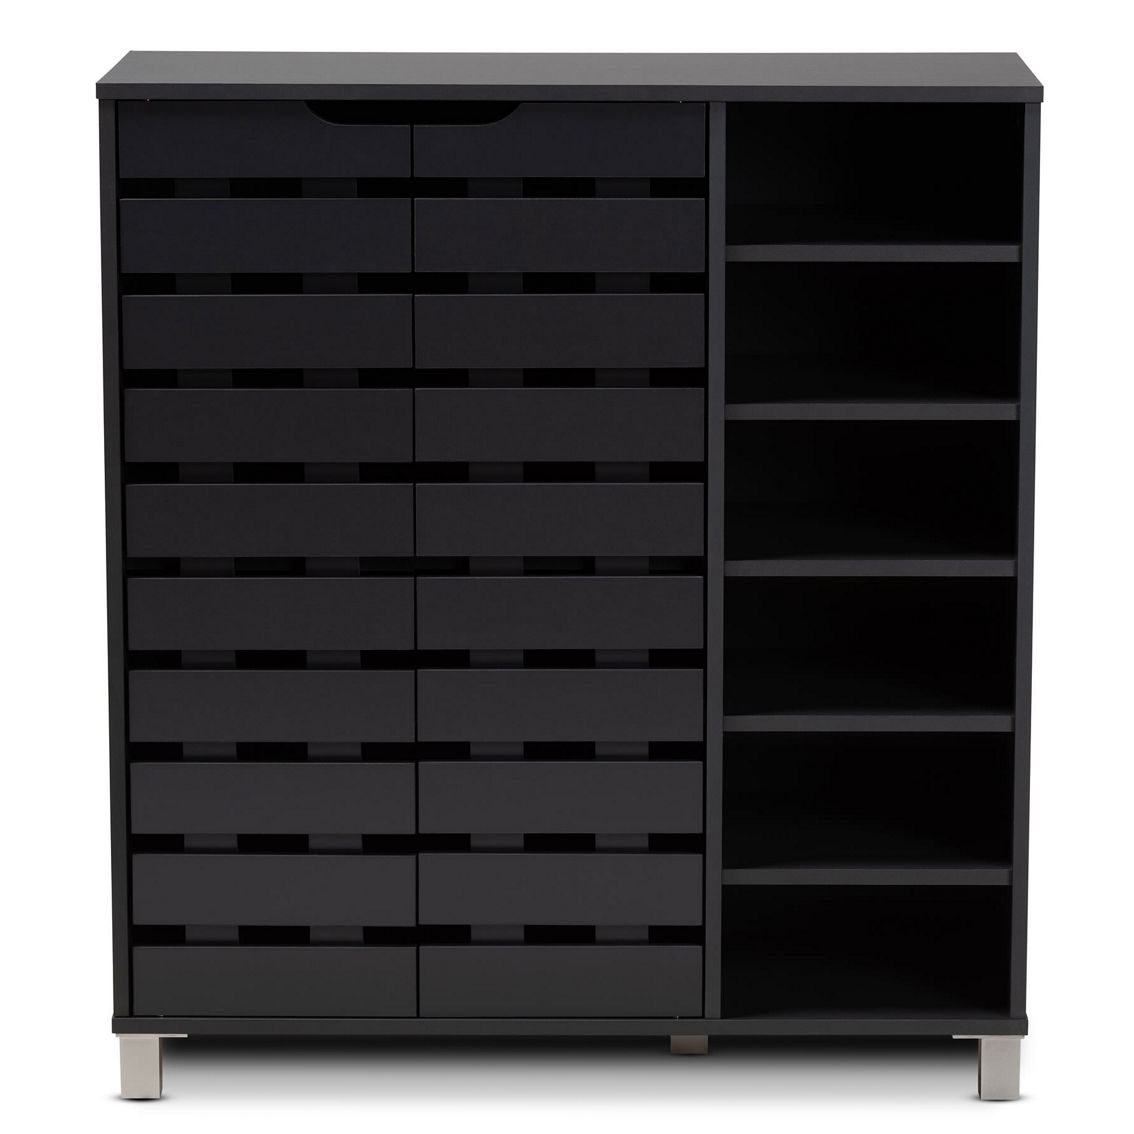 Baxton Studio Shirley Dark Grey Finished 2-Door Shoe Storage Cabinet with Shelves - Image 3 of 5